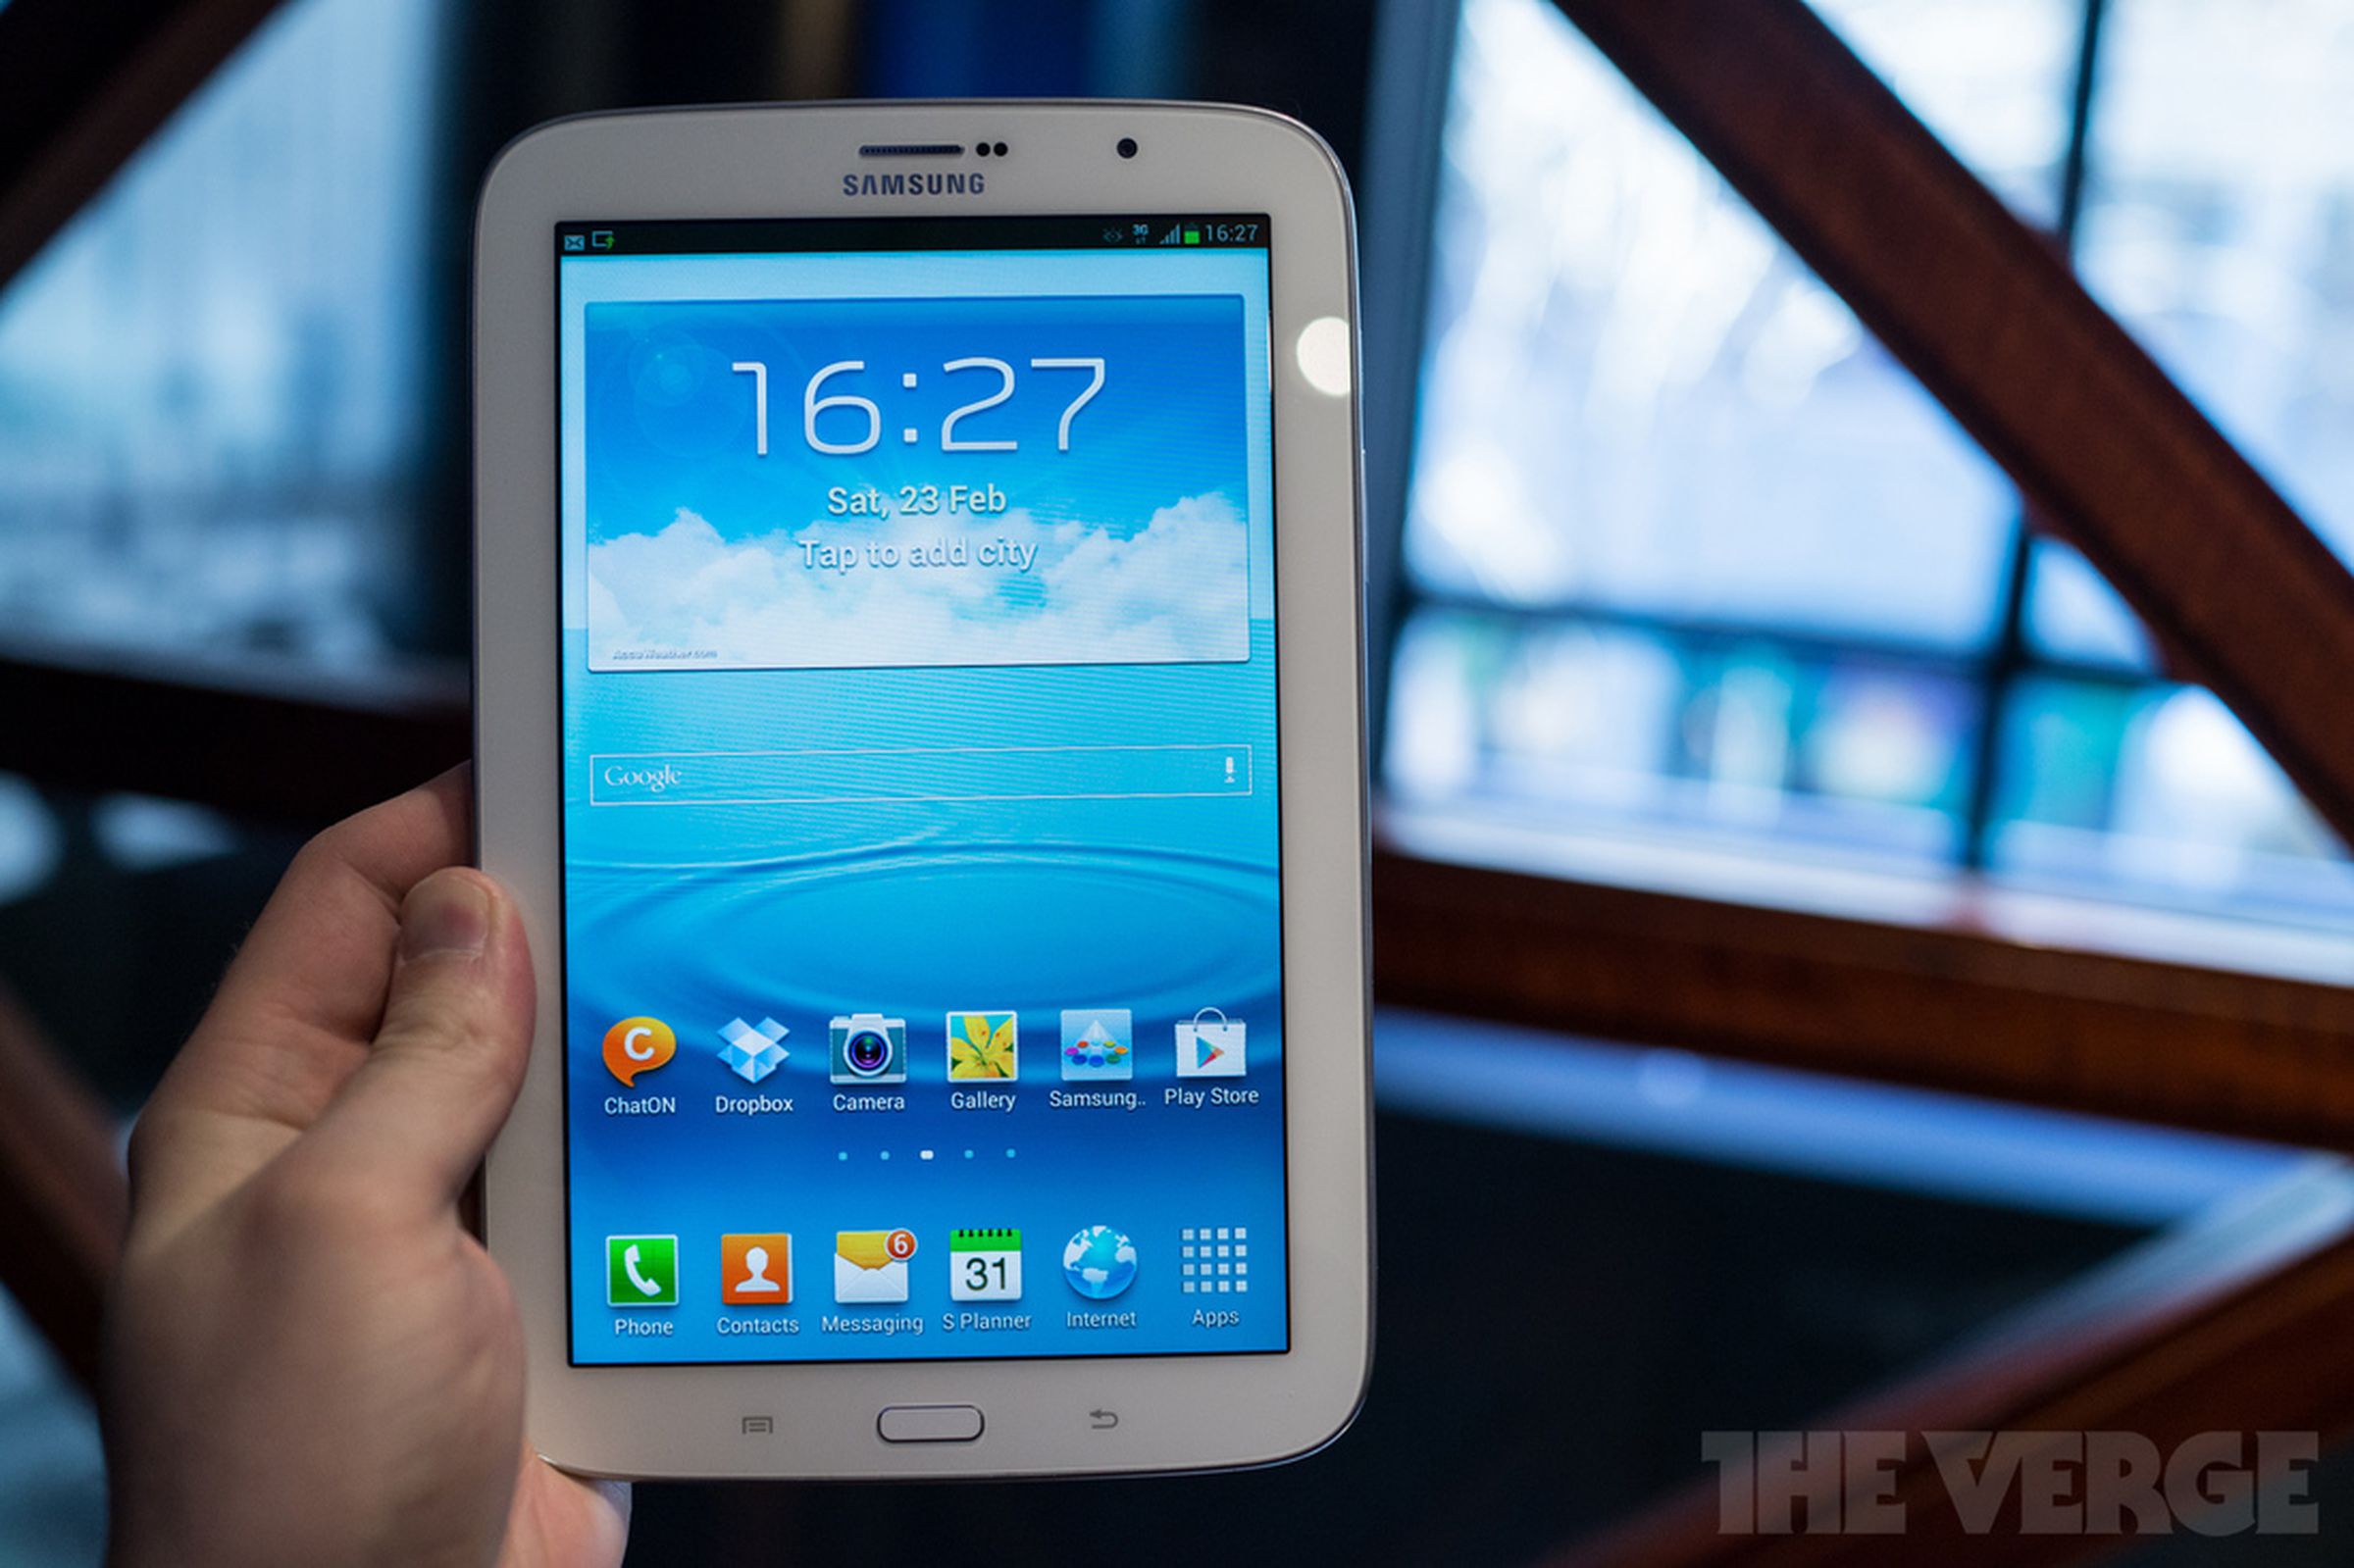 Samsung Galaxy Note 8.0 hands-on photos